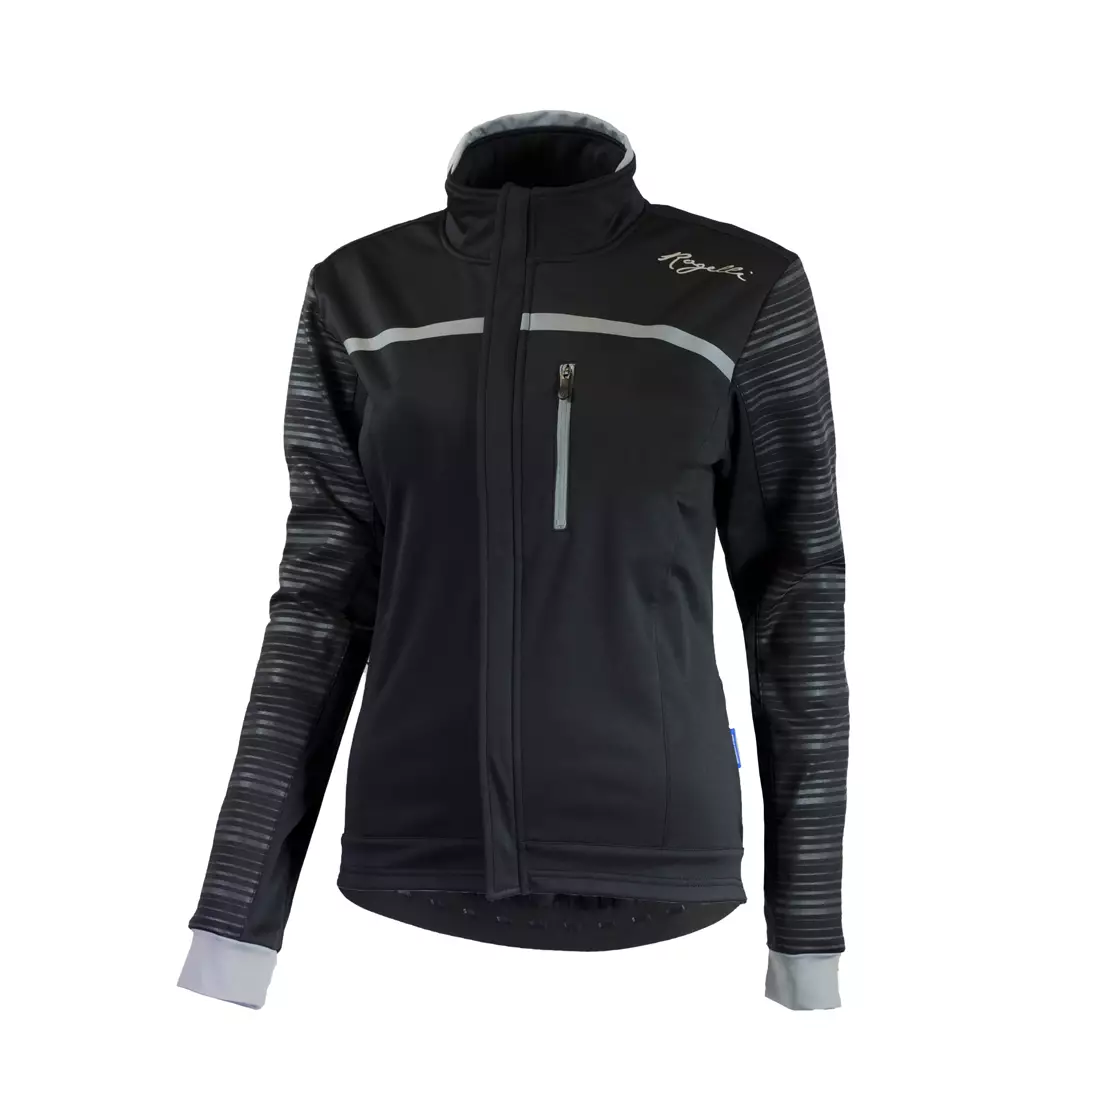 ROGELLI CAMILLA 2.0 women's winter cycling jacket, black-gray